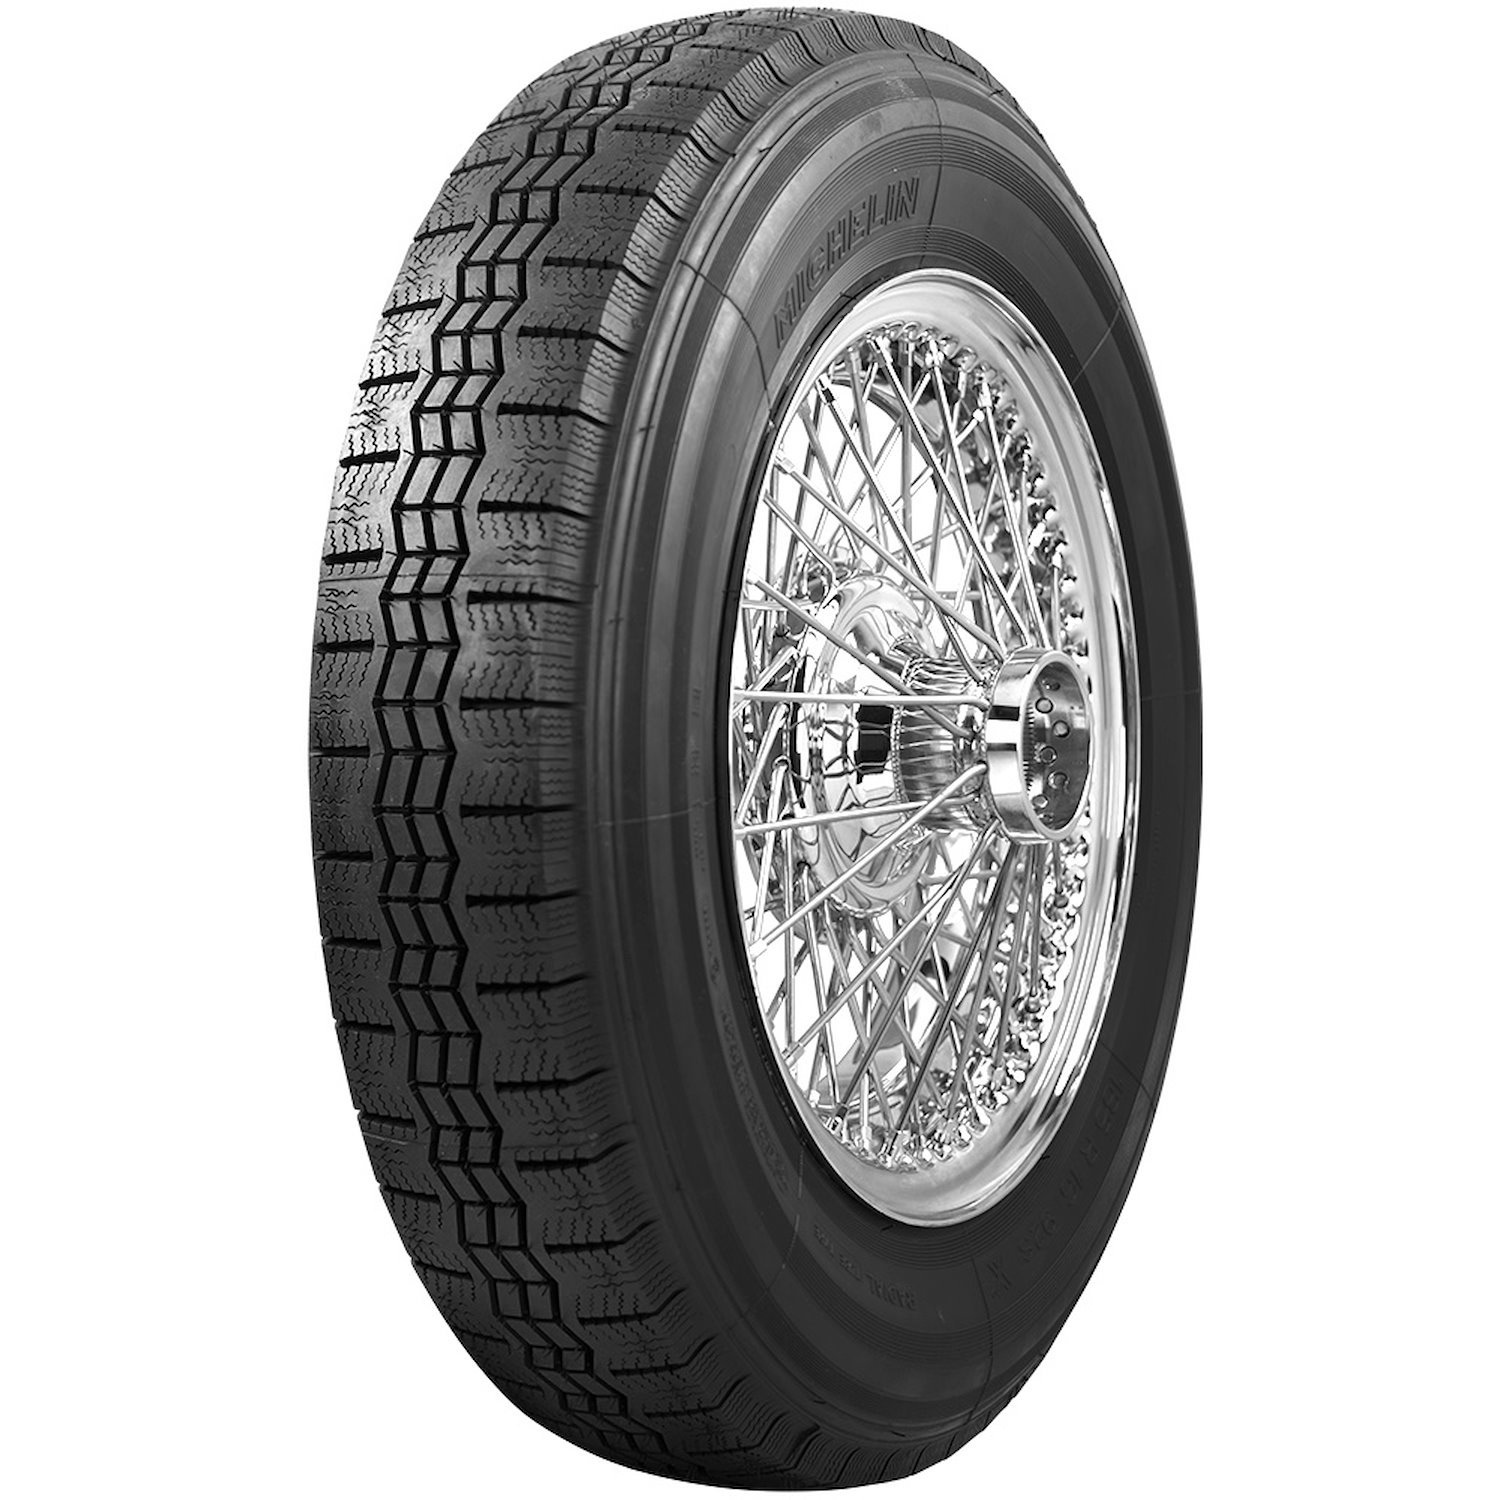 56039 Tire, Michelin X Radial, 155R15 82T